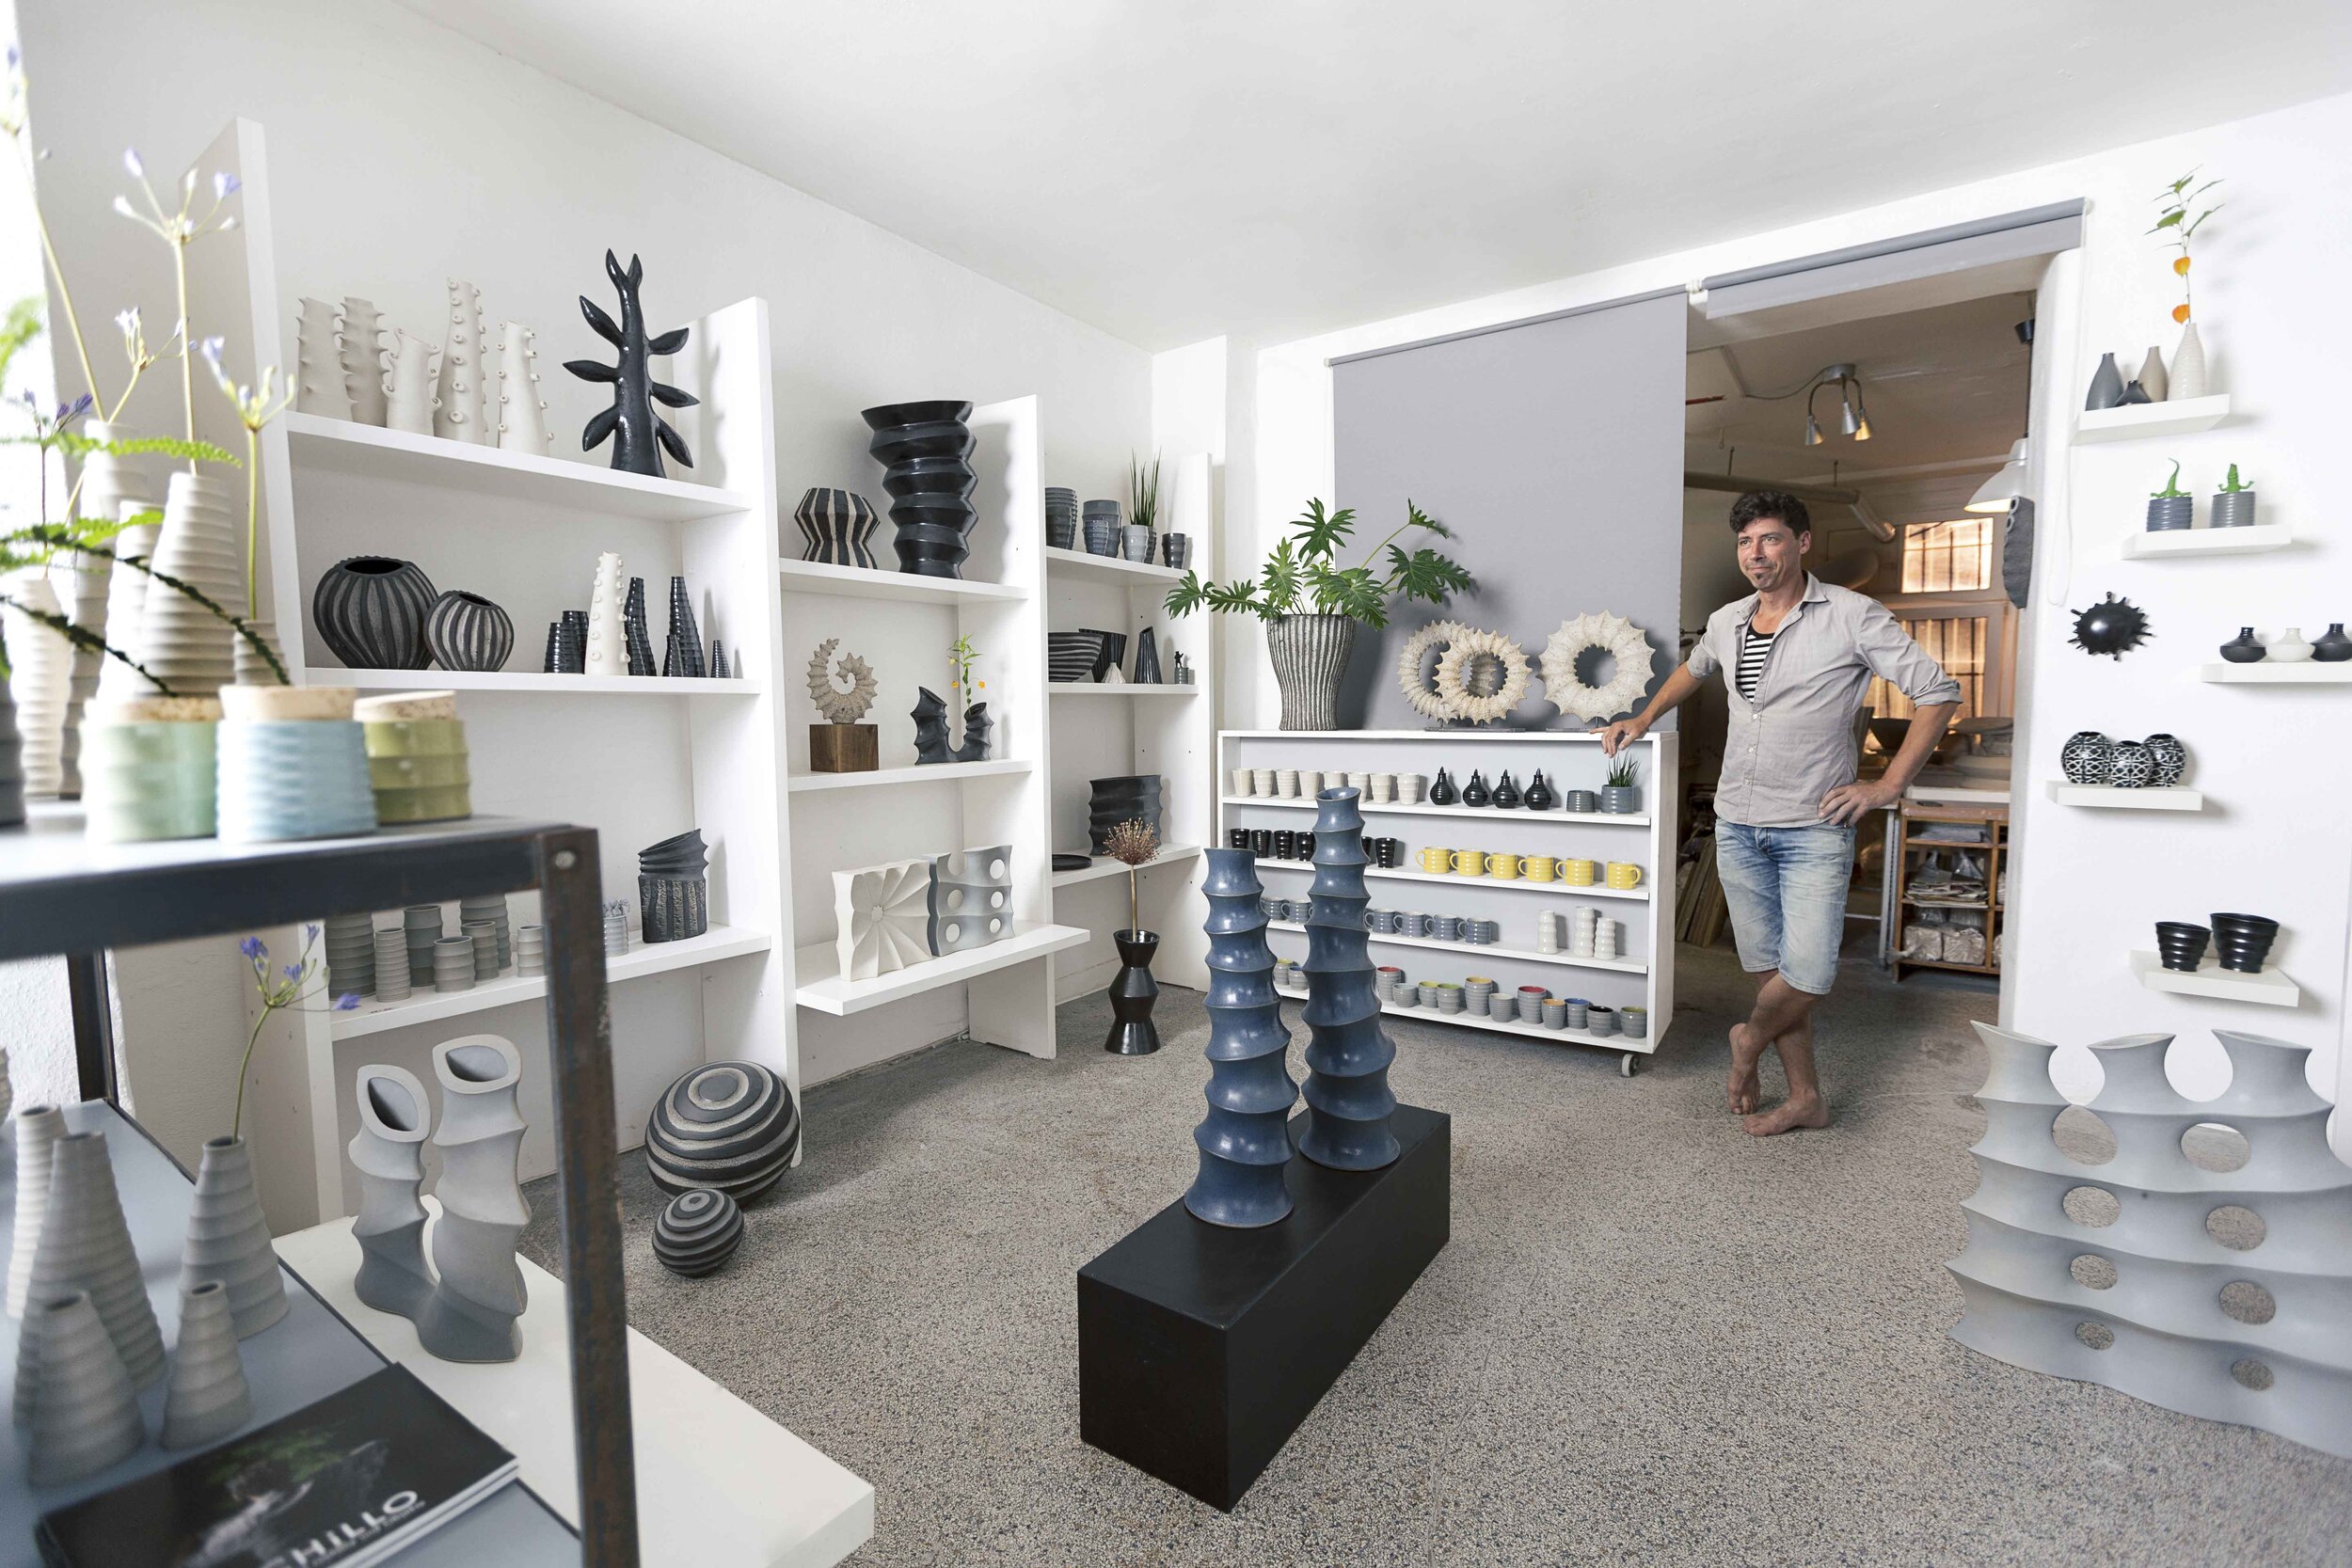 Frank Schillo's Keramikladen